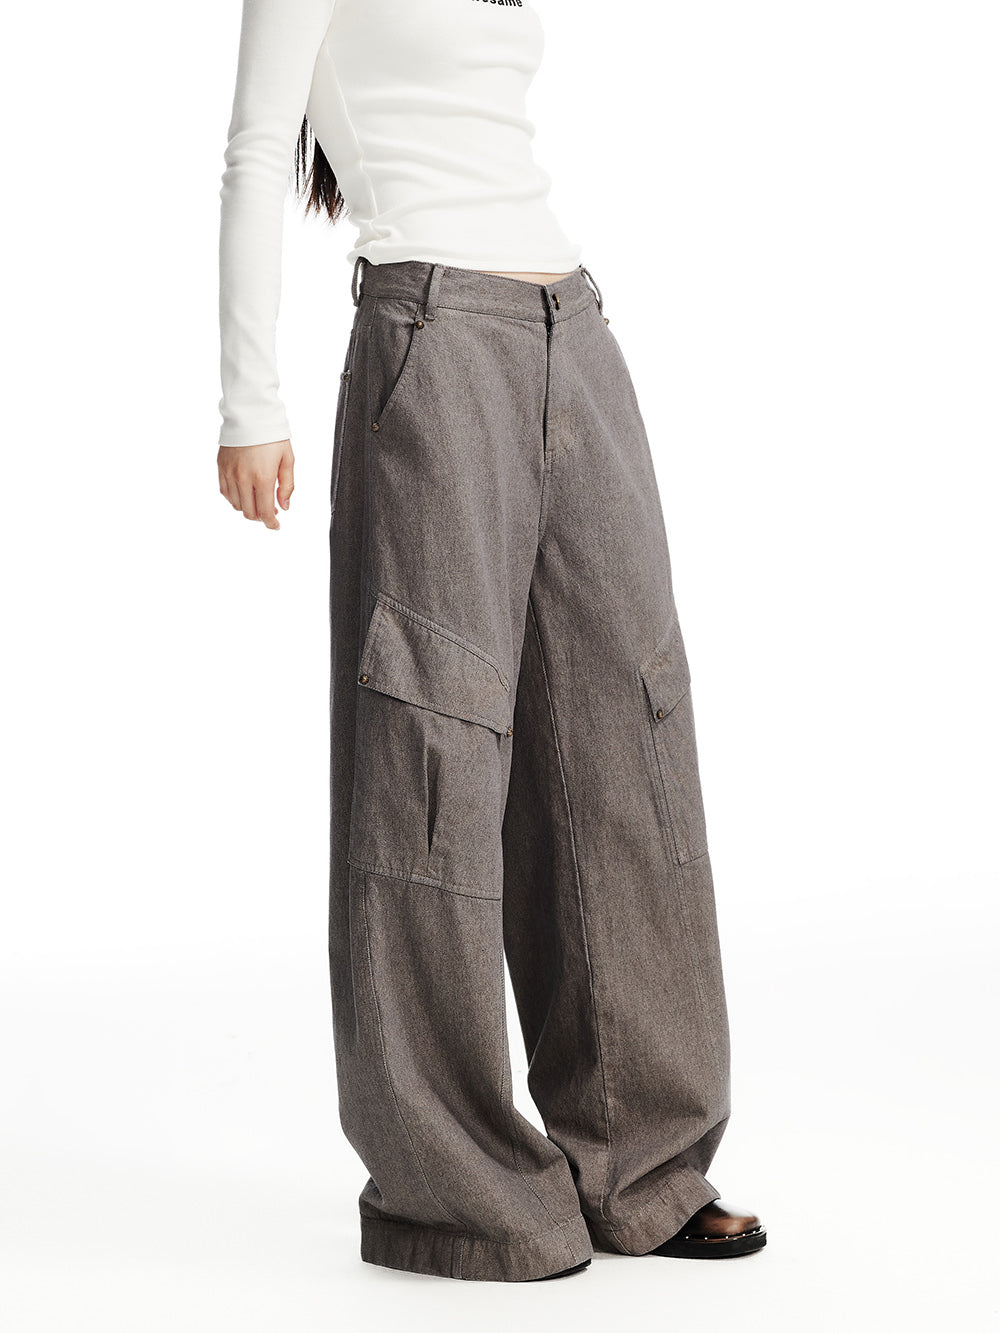 MUKTANK x WESAME LAB Vintage Loose Fit Slimming Versatile Straight Mid-High Waist Jeans